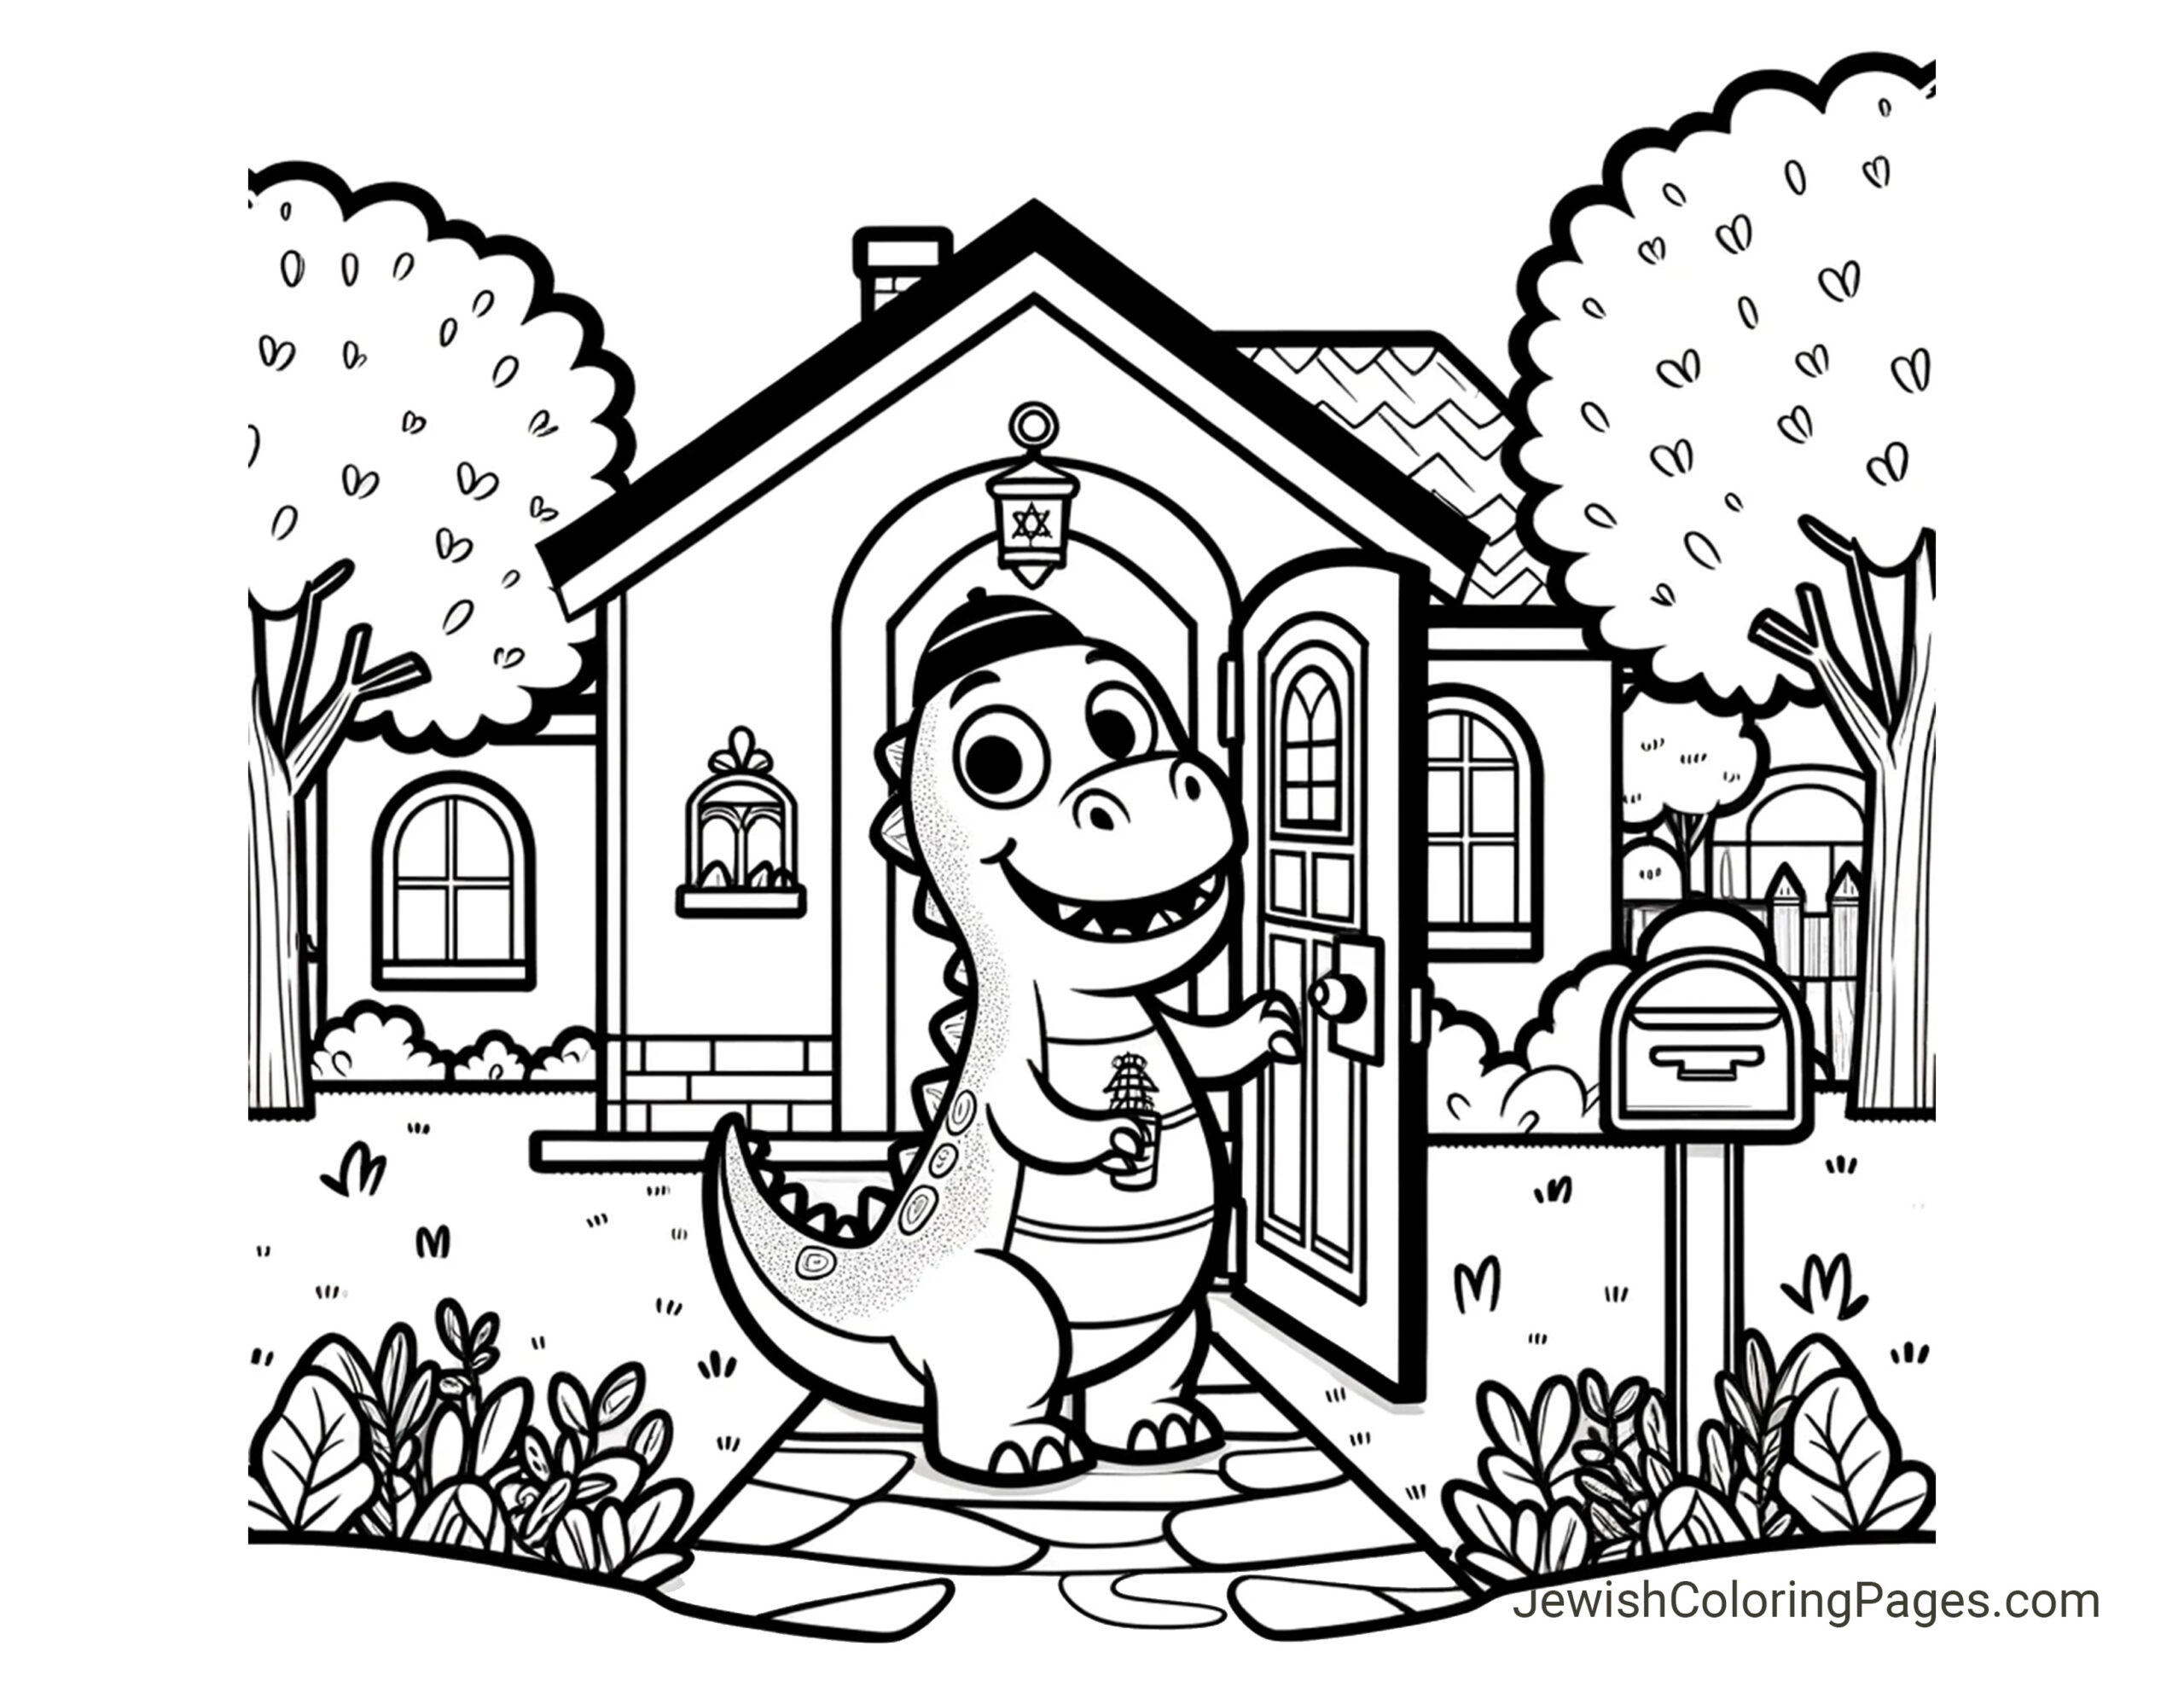 Shabbat dinosaur coloring page